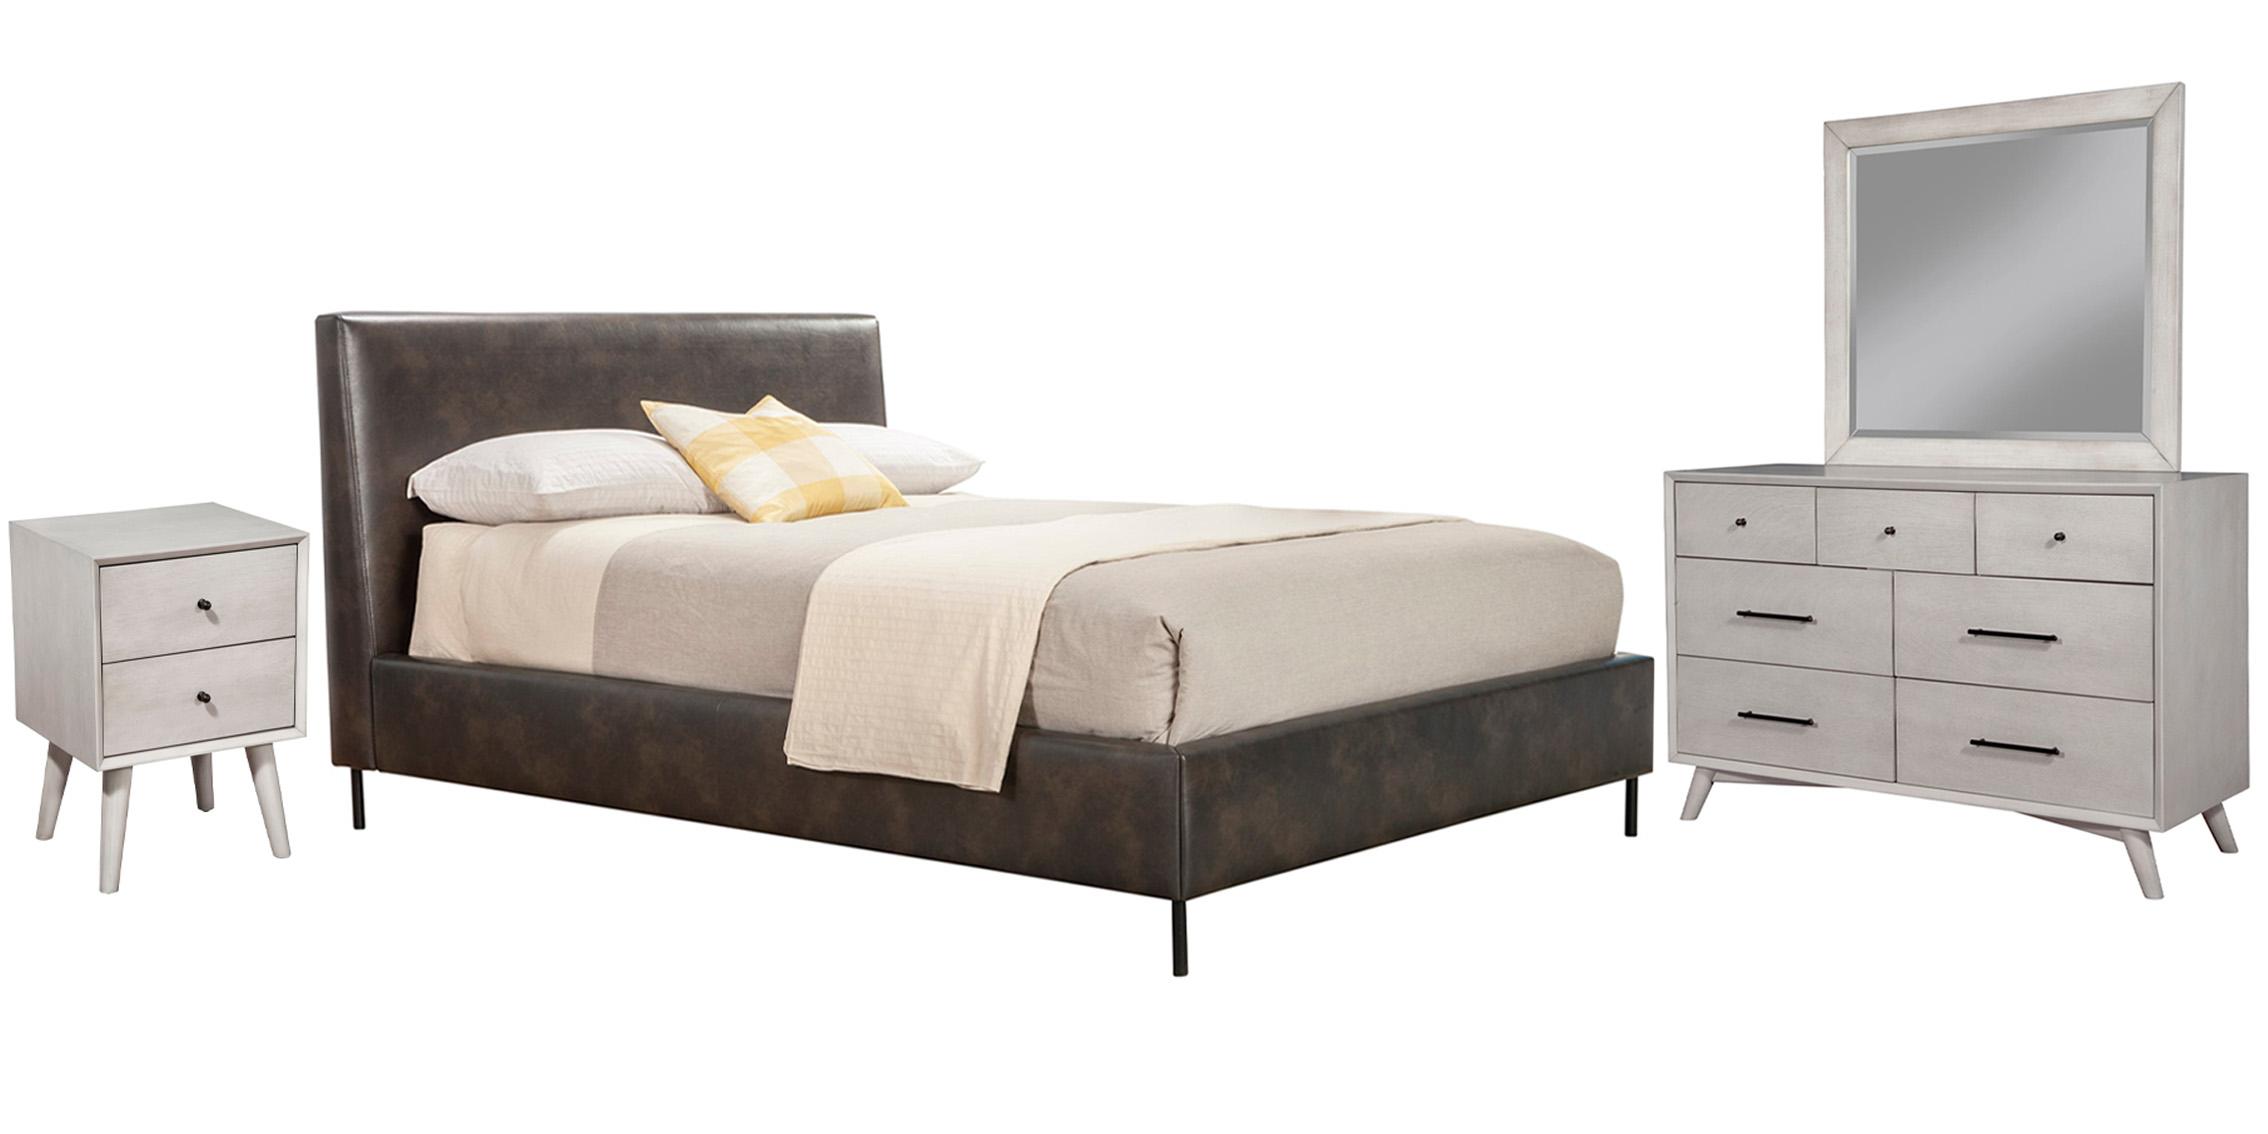 Modern Platform Bedroom Set SOPHIA  / FLYNN 6902EK-GRY-Set-4 in Gray Faux Leather